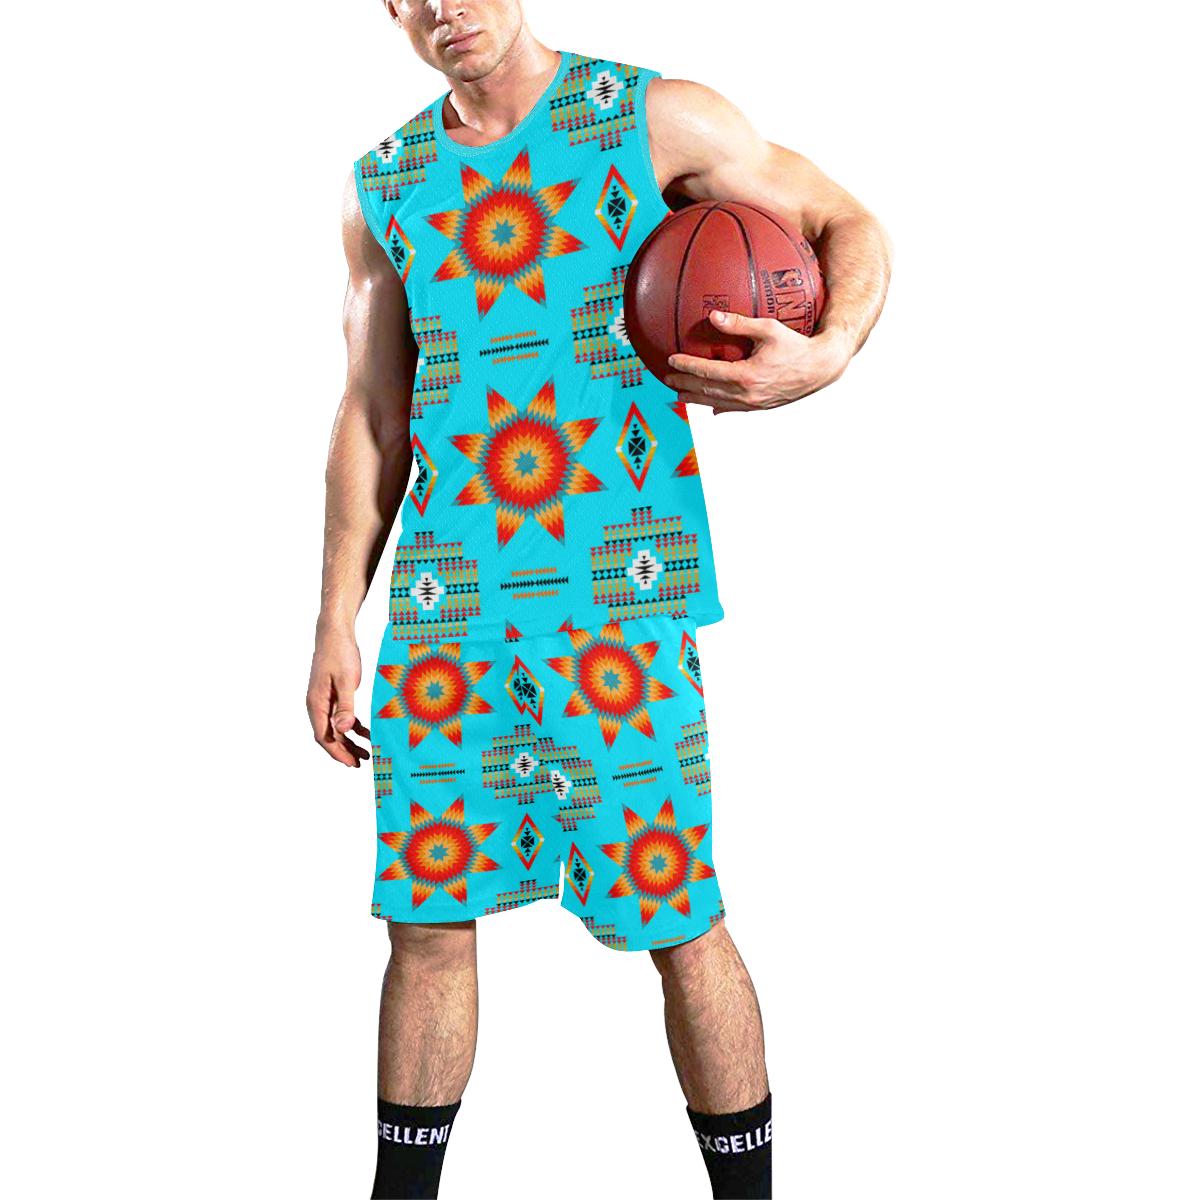 Rising Star Harvest Moon All Over Print Basketball Uniform Basketball Uniform e-joyer 